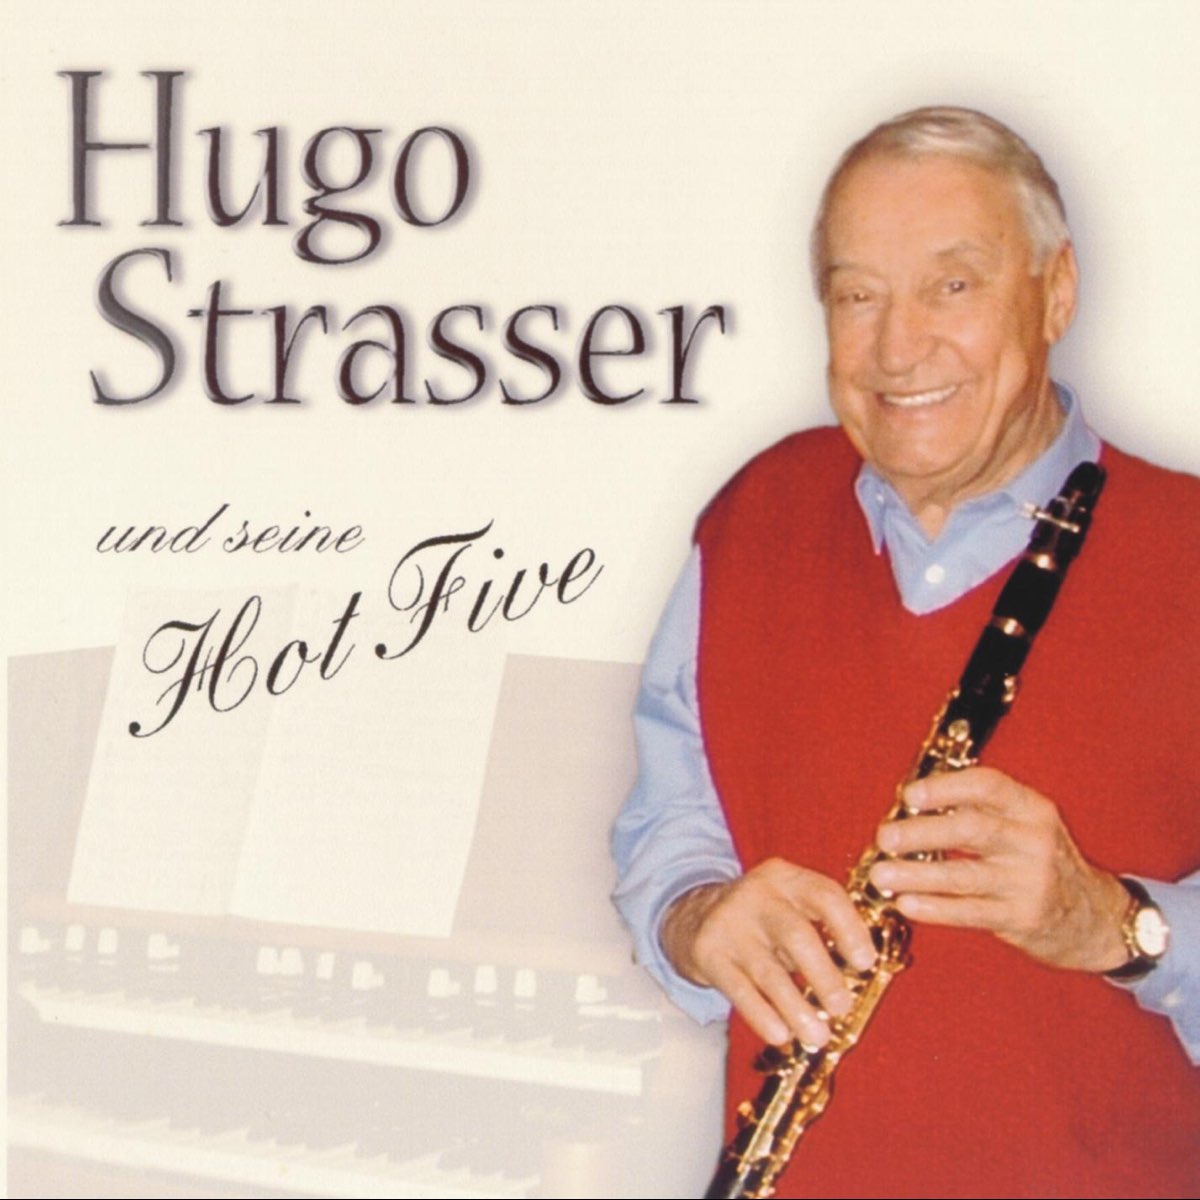 Hugo strasser. "Hugo Strasser" && ( исполнитель | группа | музыка | Music | Band | artist ) && (фото | photo).